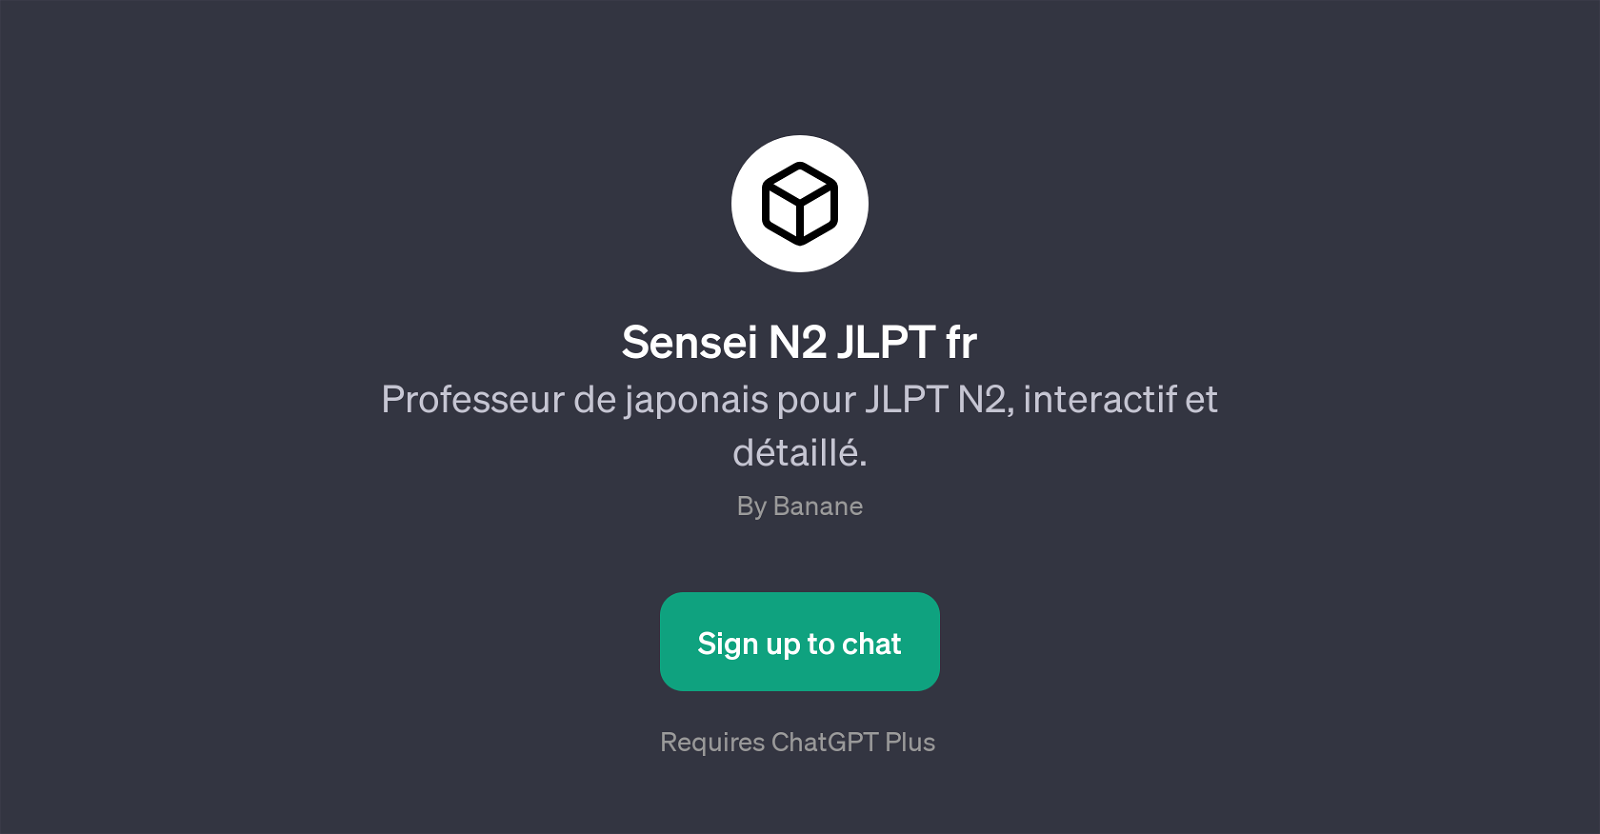 Sensei N2 JLPT fr website